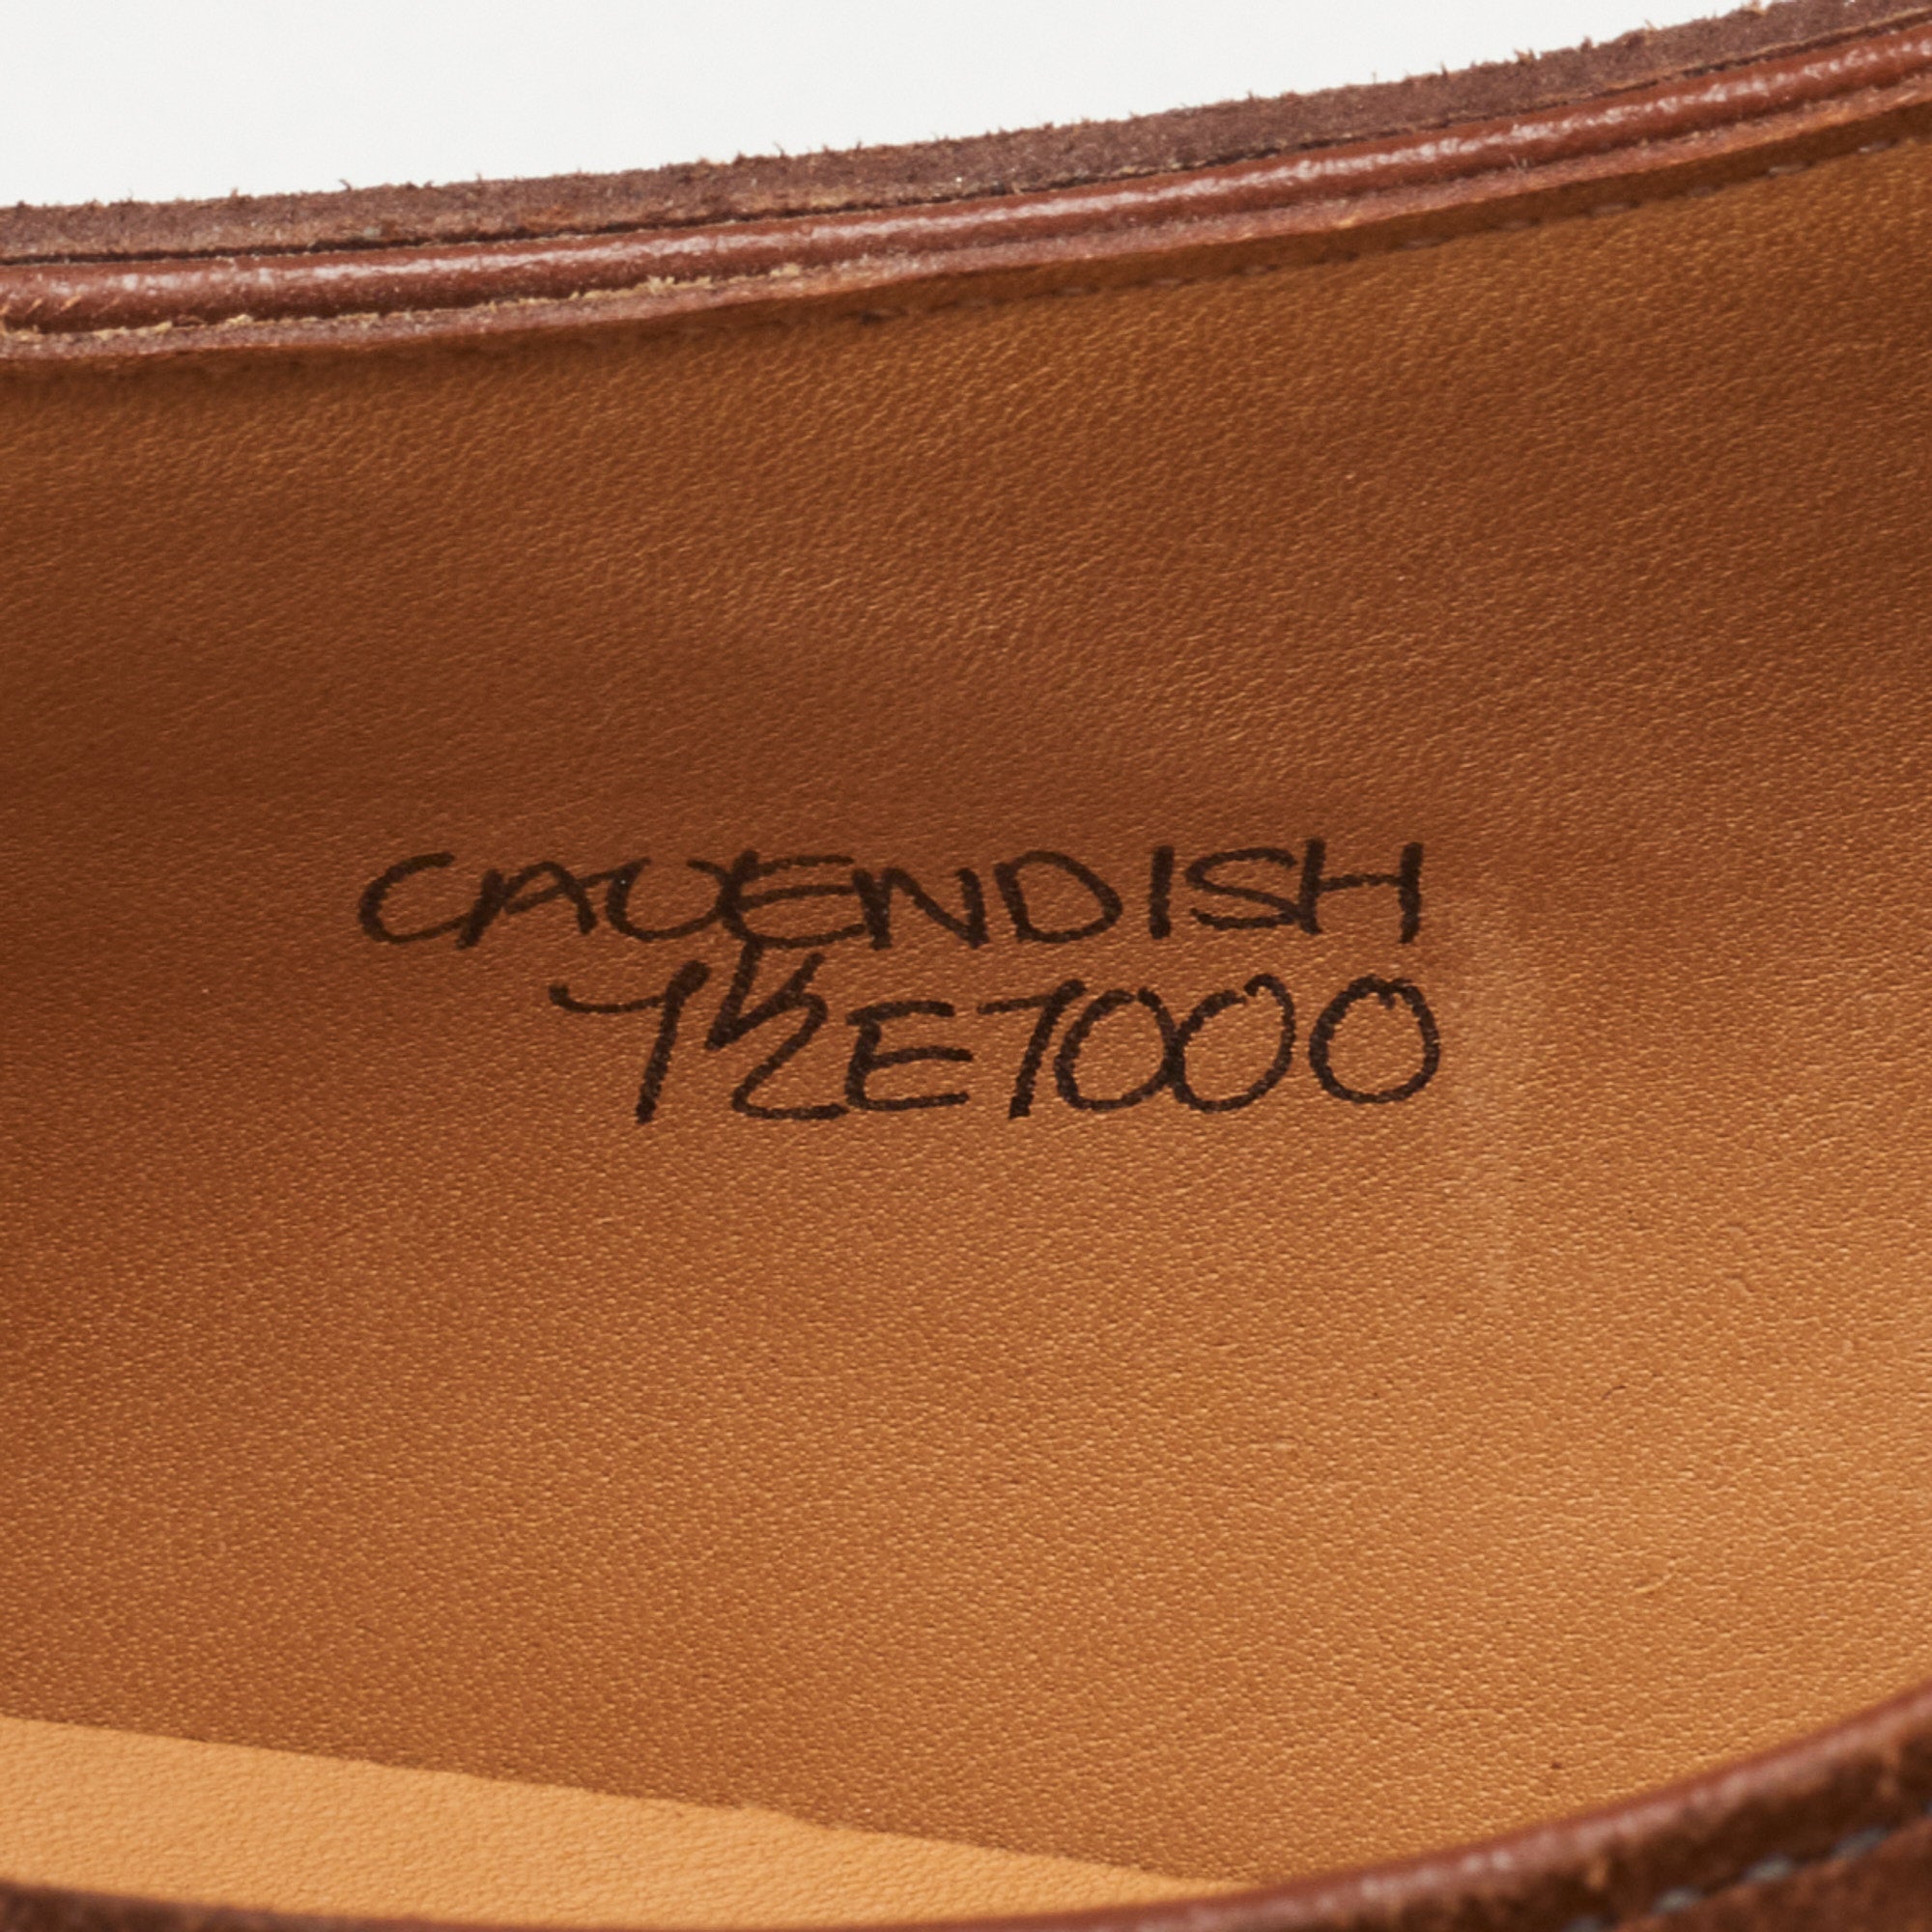 JOHN LOBB By REQUEST "Cavendish" Suede Oxford Shoes UK 7.5E US 8.5 Last 7000 JOHN LOBB